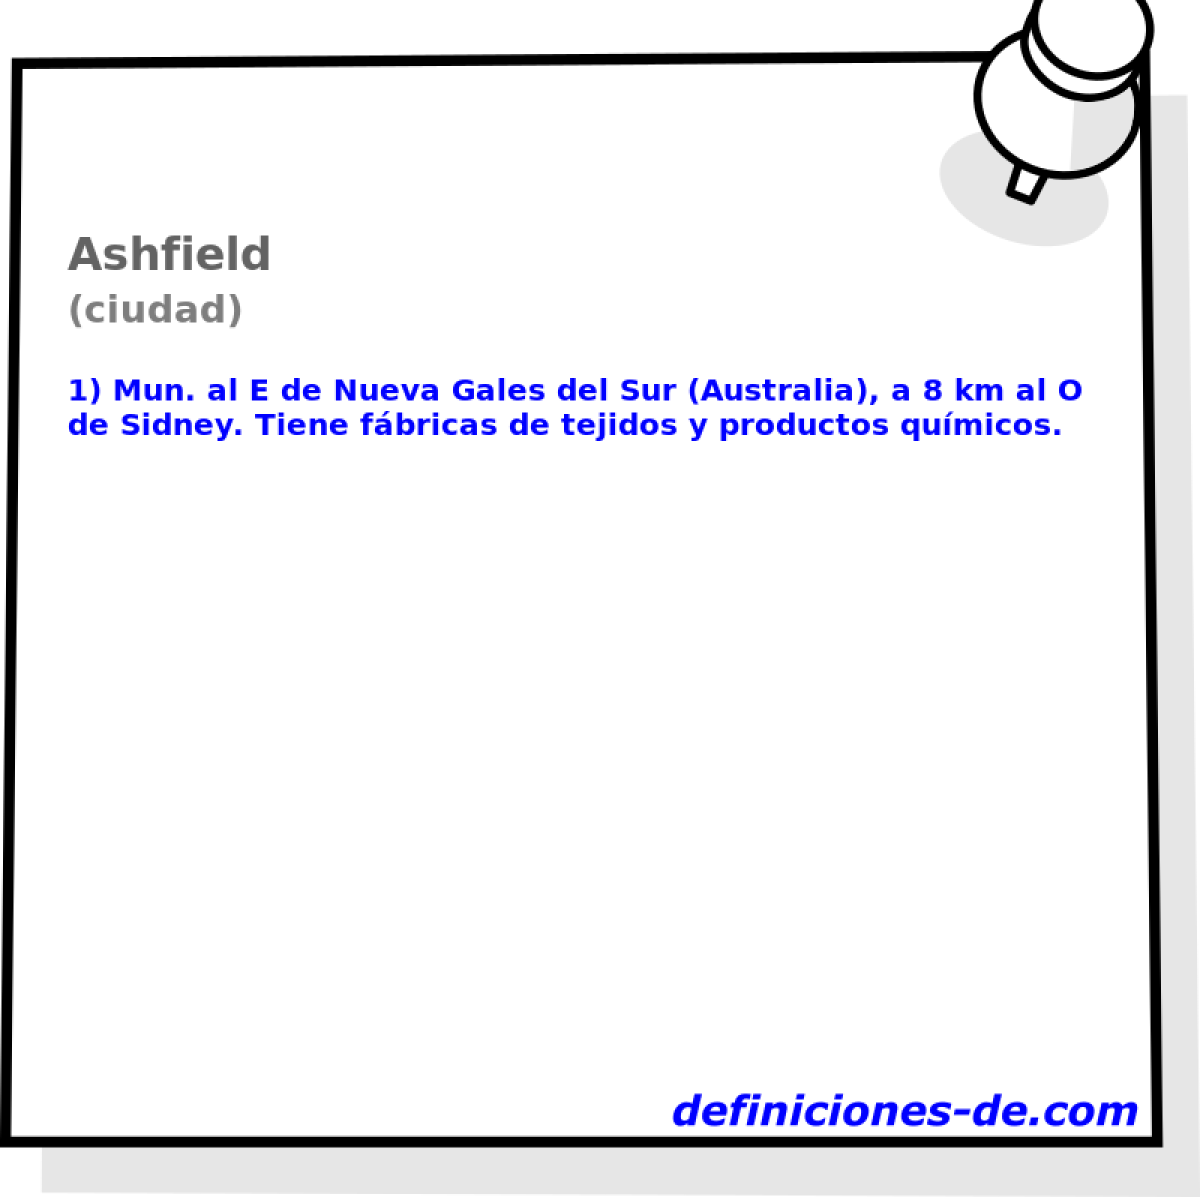 Ashfield (ciudad)